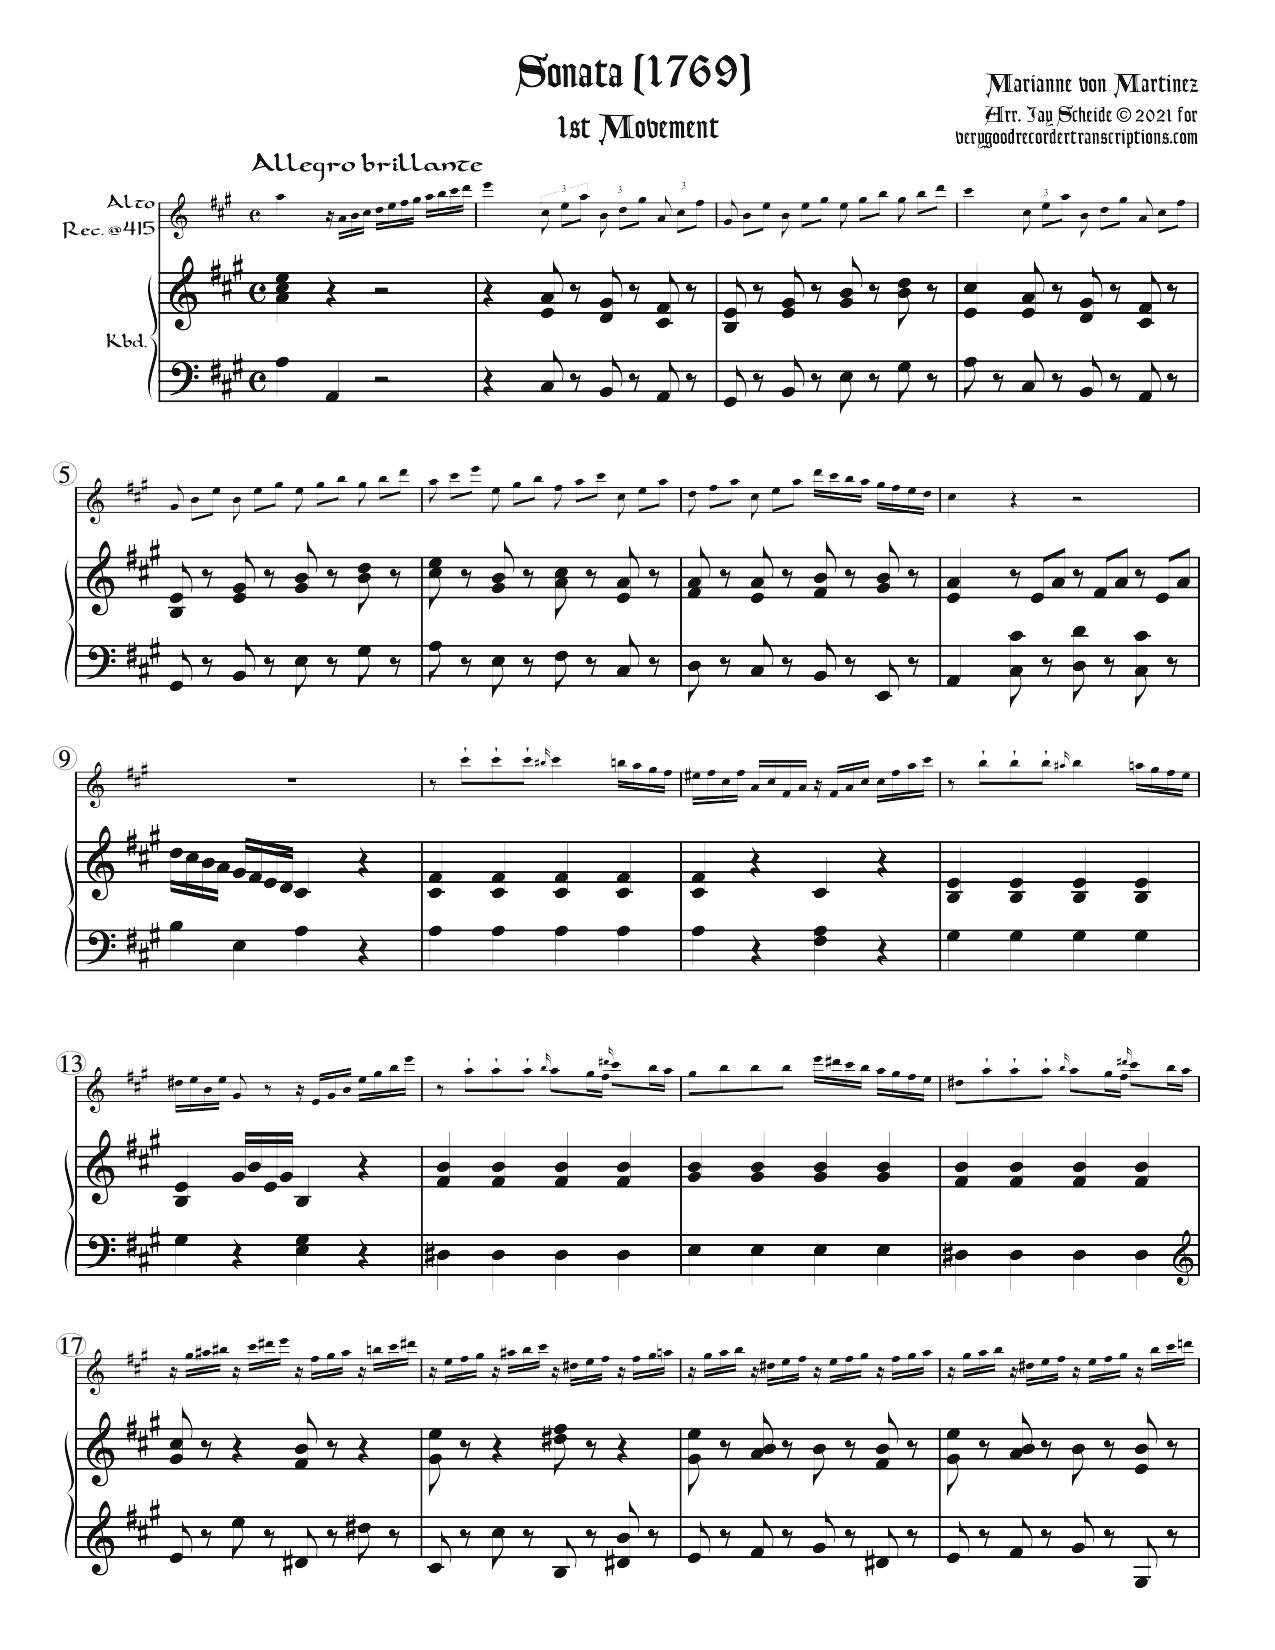 Sonata (1769), arr. for alto @415 doubling alto @440